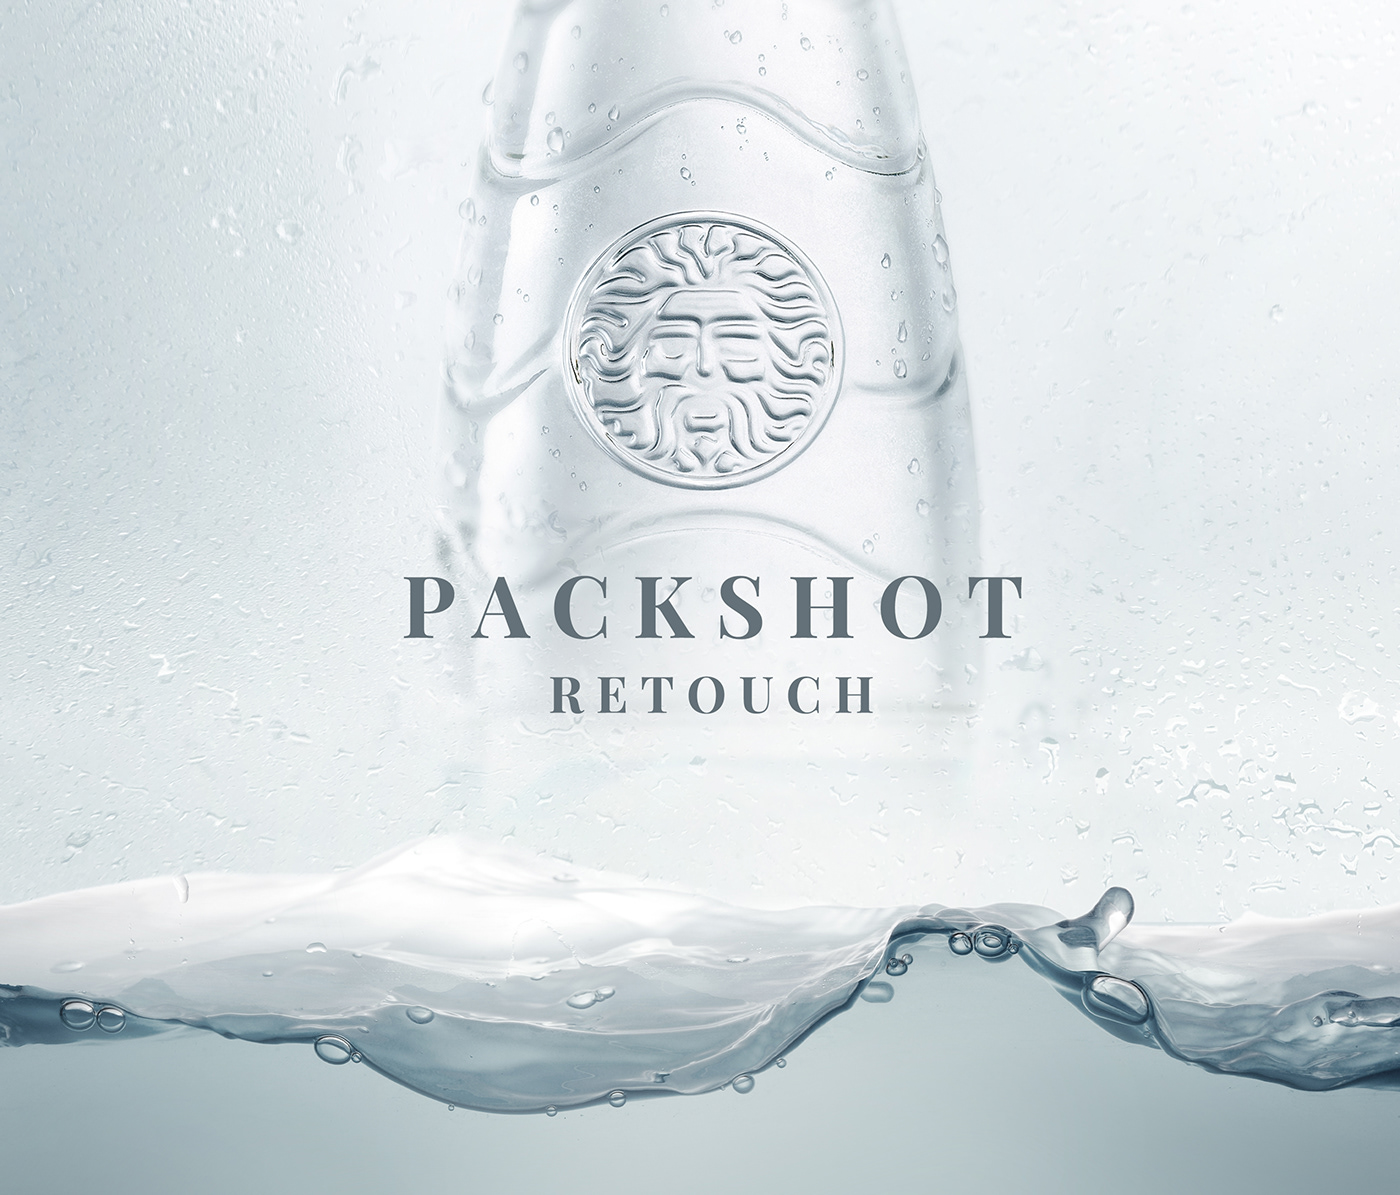 Advertising  bottle glass key visual photomanipulating retouch water ad photoshop visual